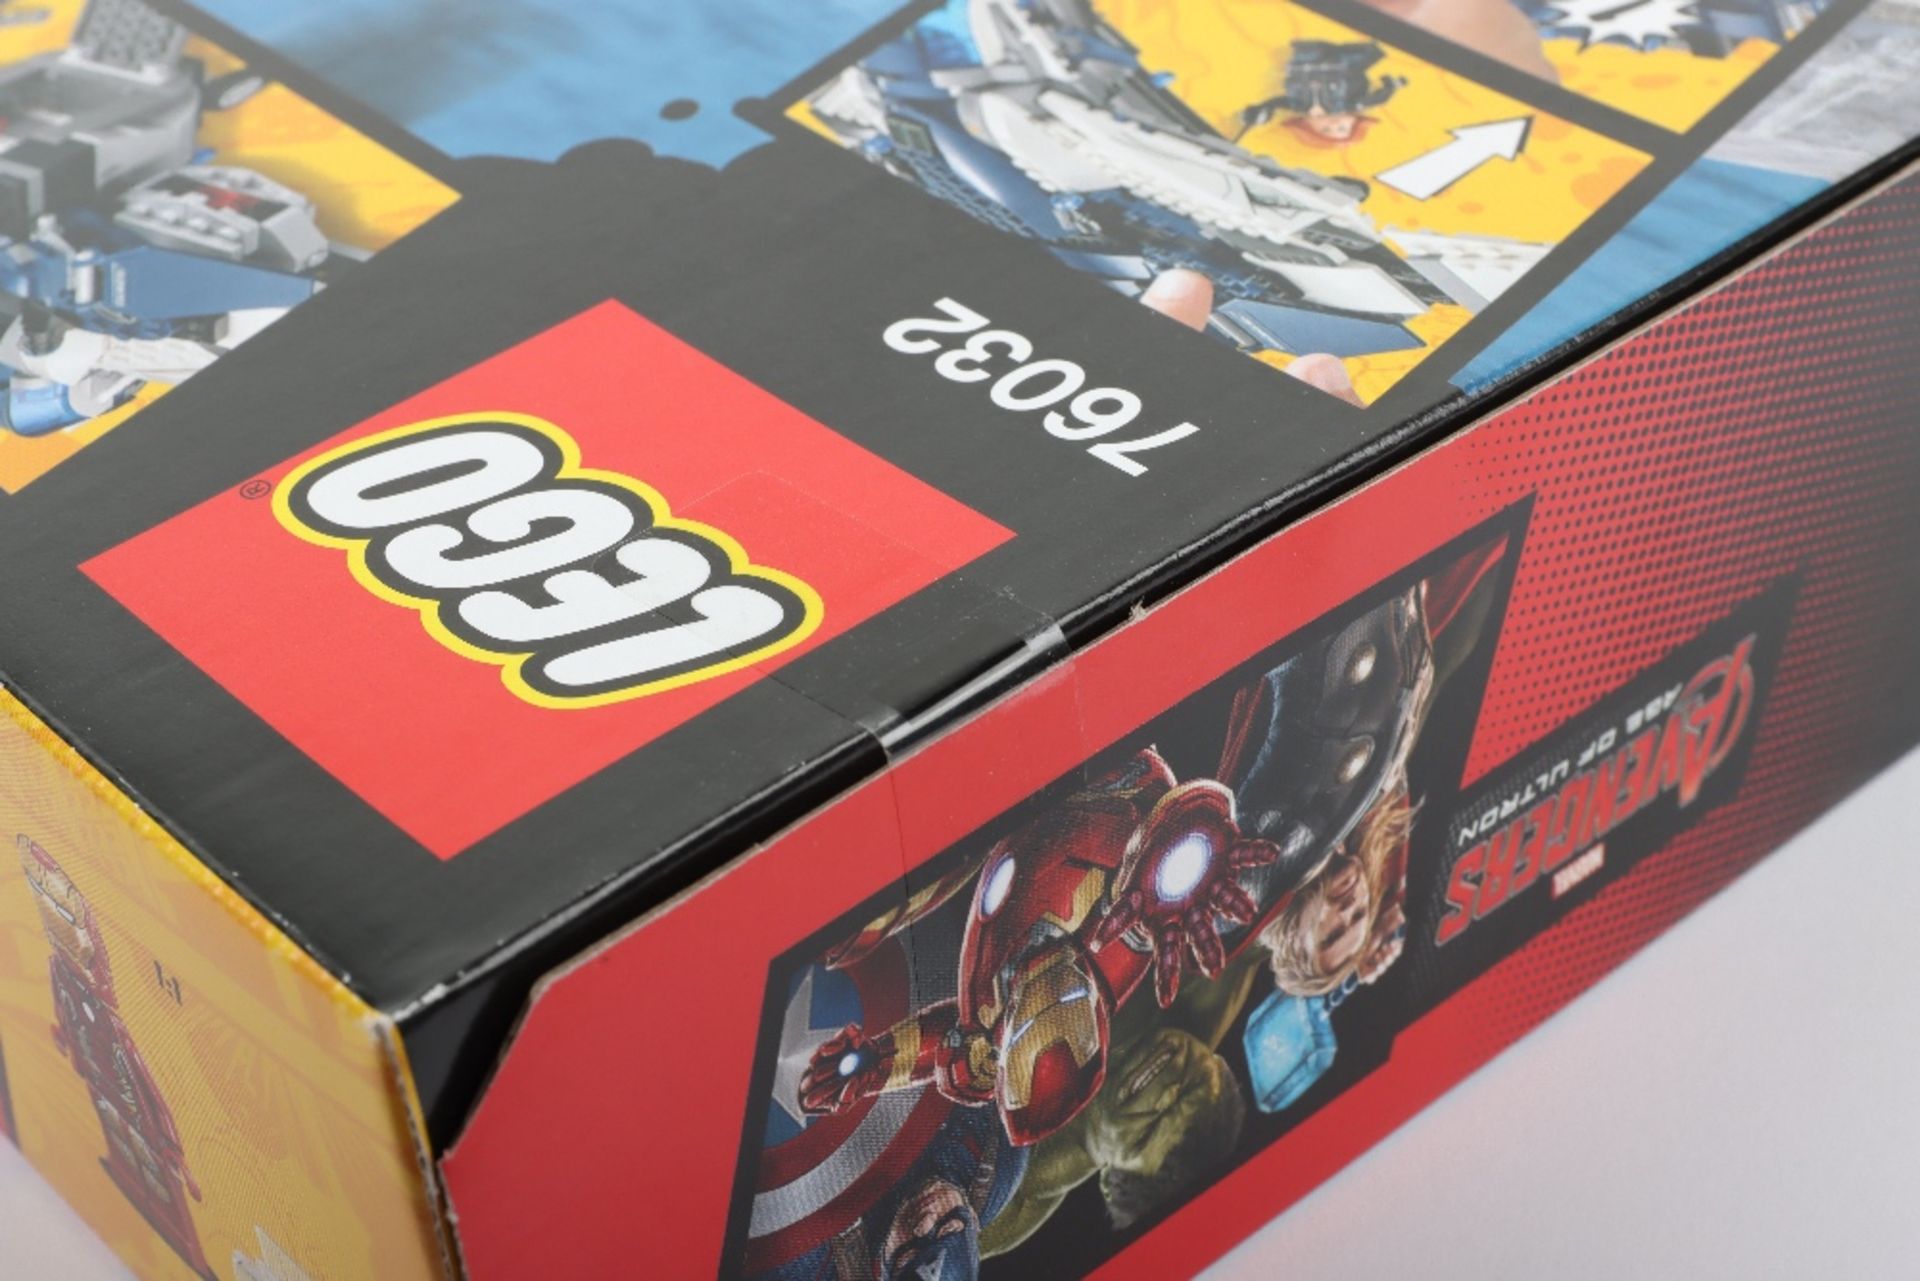 Lego Marvel Superheroes 76032 The Avengers Quinjet city chase sealed boxed - Image 5 of 8